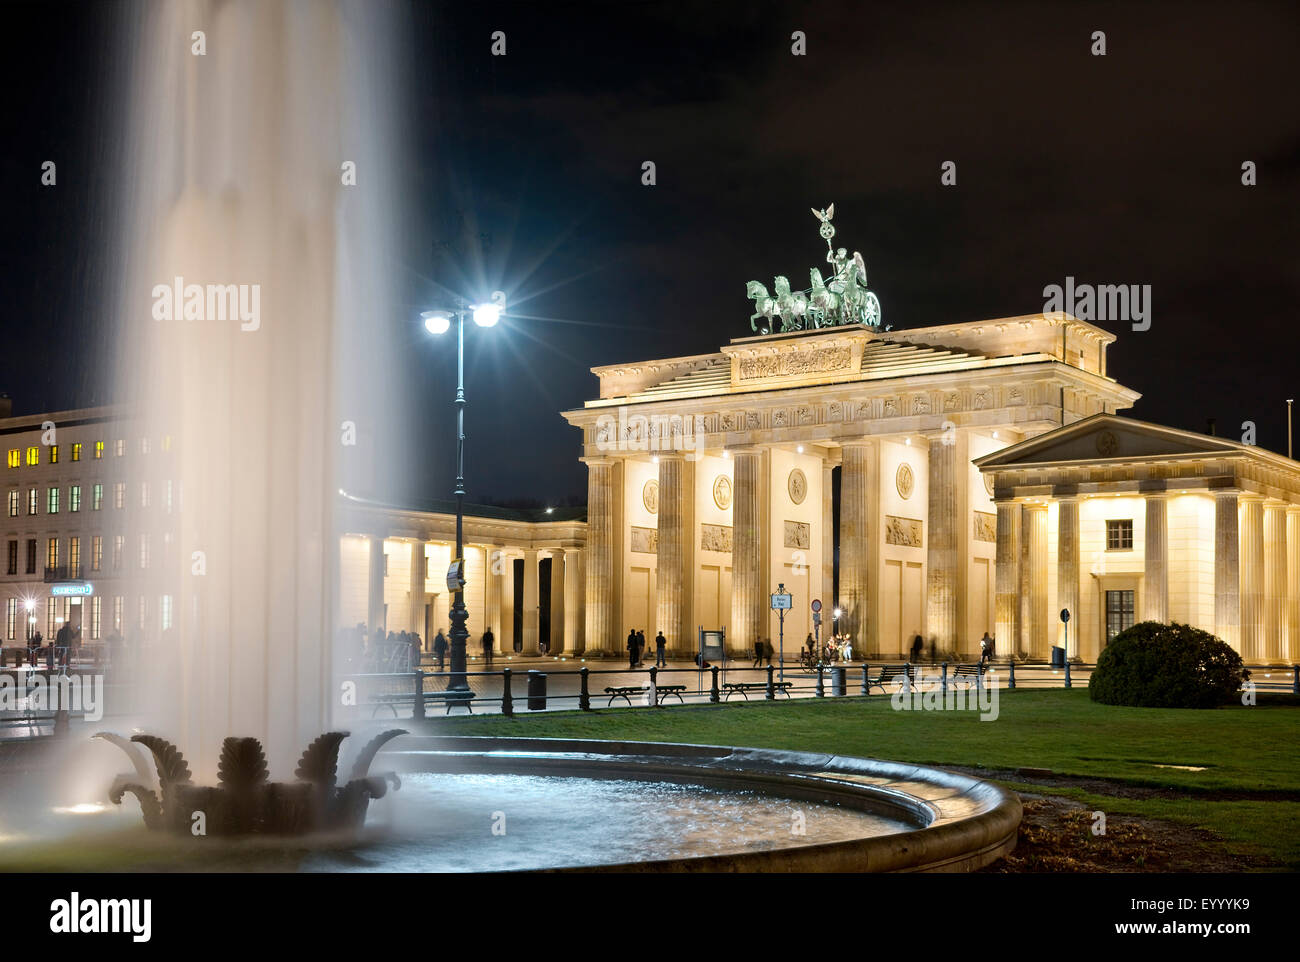 Pariser Platz with Brandenburg Gate and quadriga at night, Germany, Berlin Stock Photo